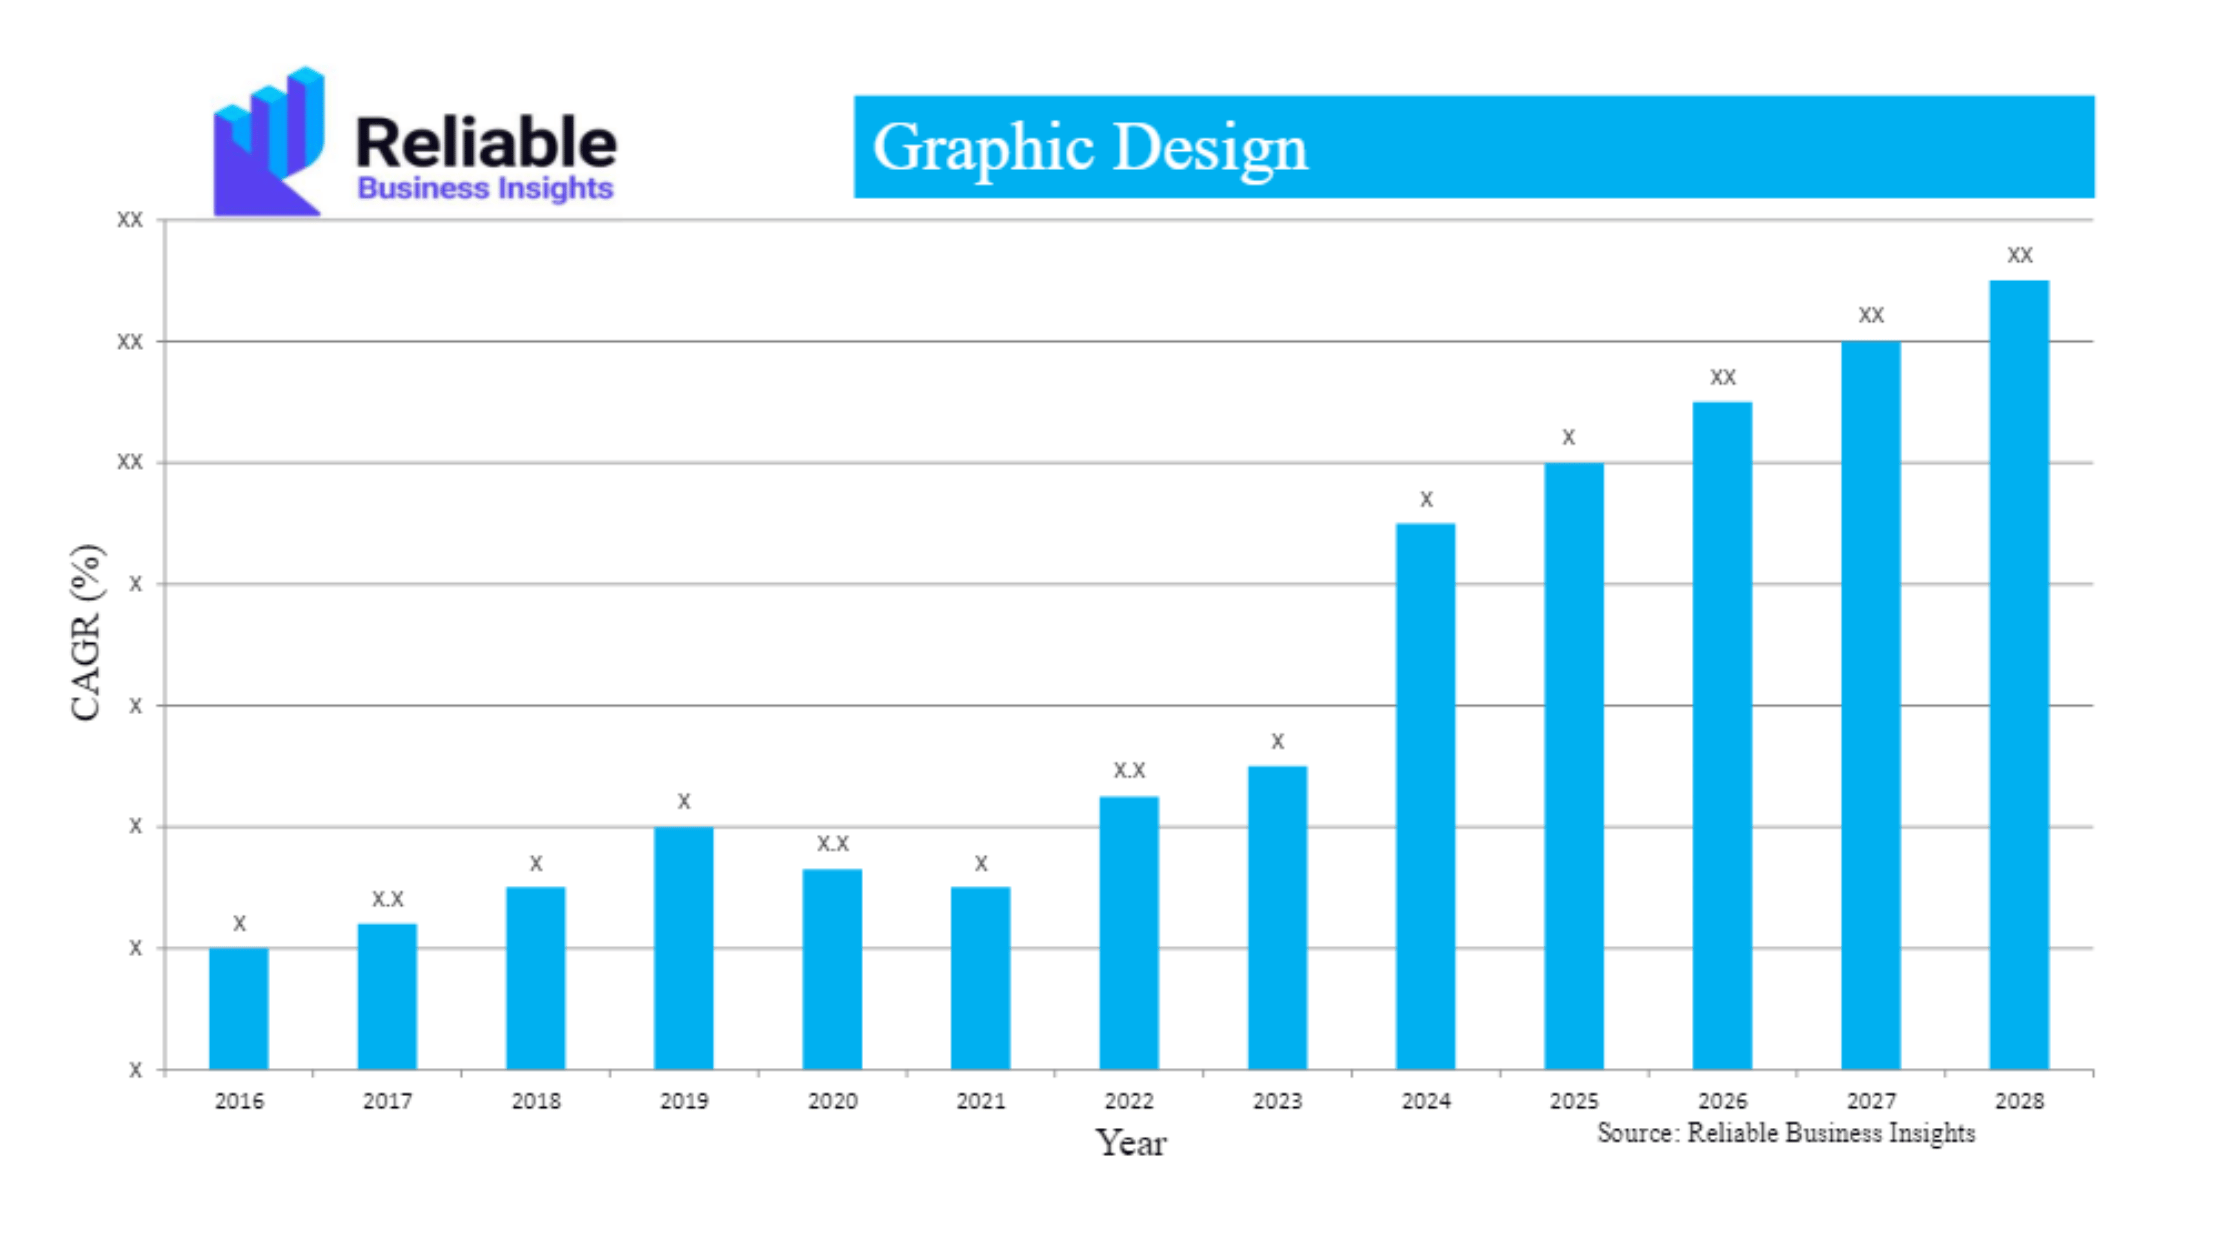 Global Graphic Design Market